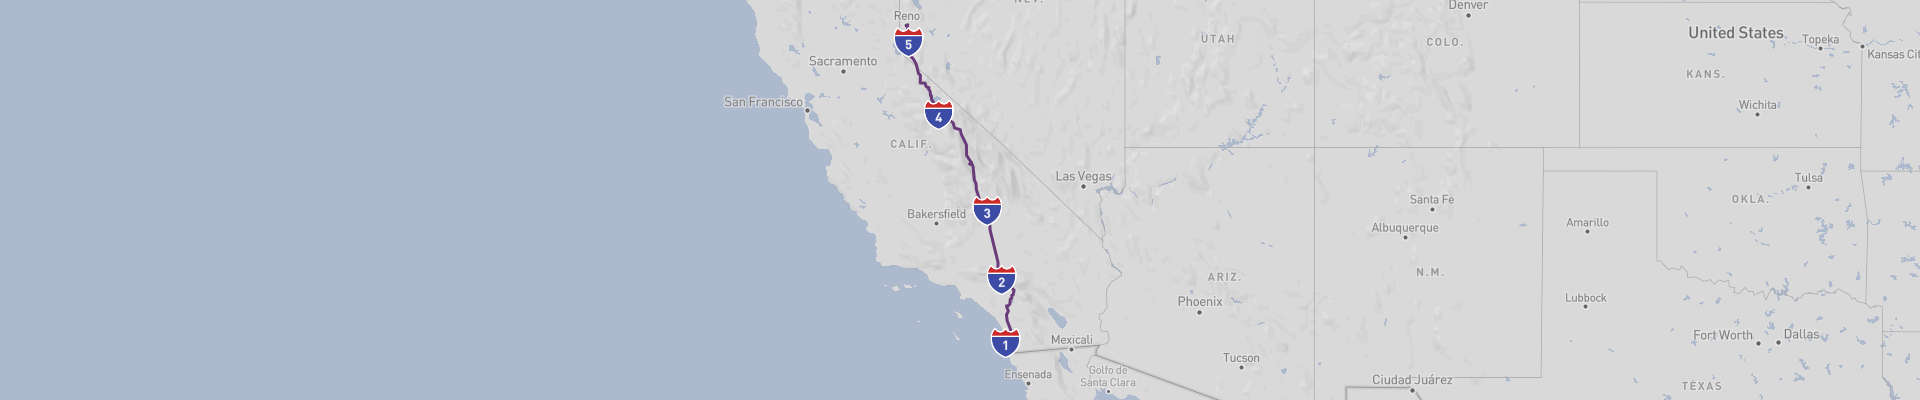 Californië US 395 Road Trip